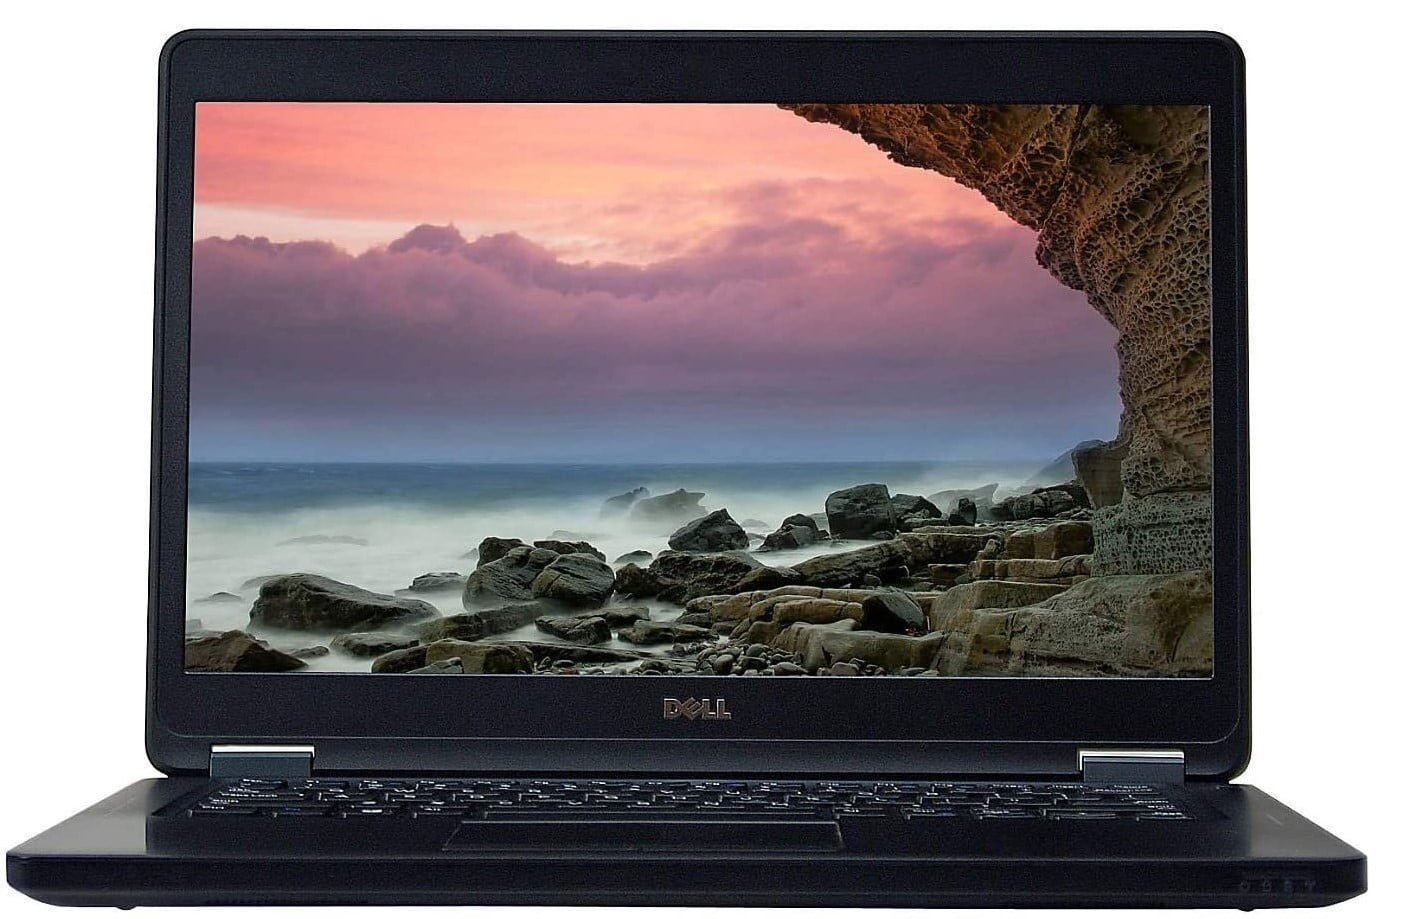 Dell Latitude E5470 HD Business Laptop Notebook PC (Intel Core i5-6300U,  8GB Ram, 256GB Solid State SSD, HDMI, Camera, WiFi, SC Card Reader) Win 10  